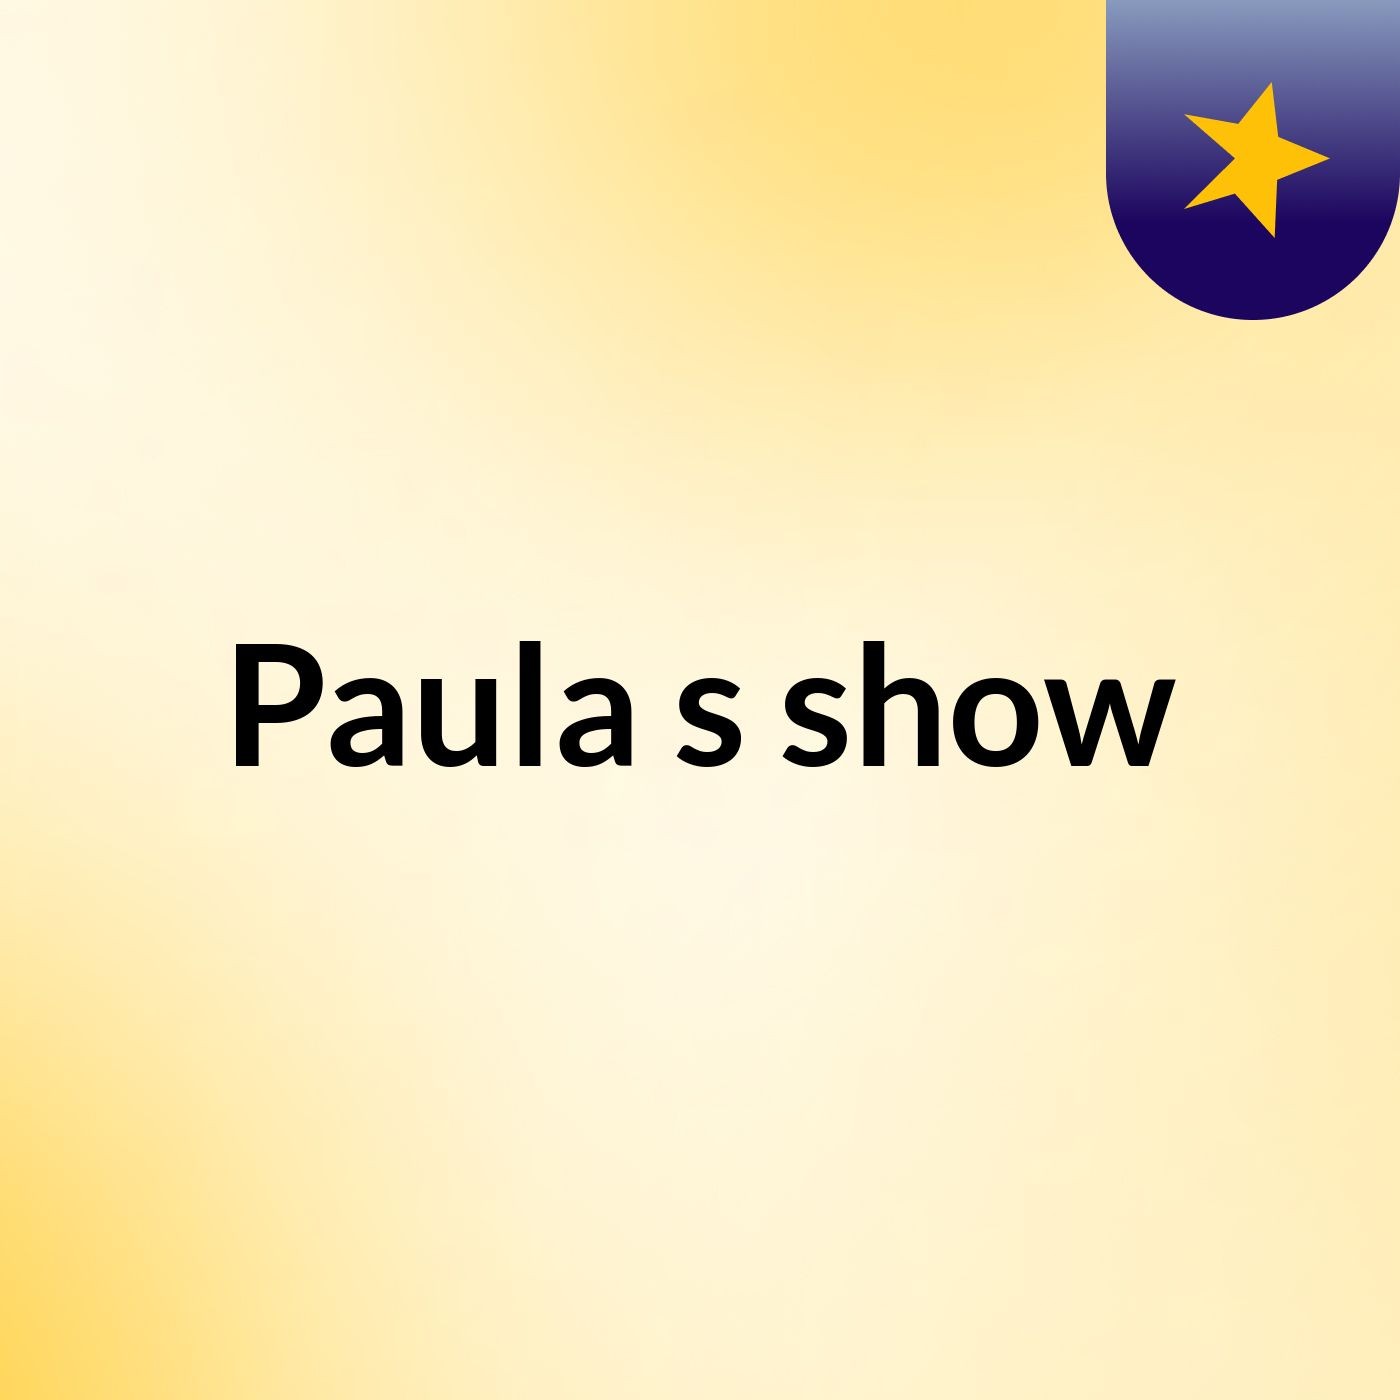 Paula's show